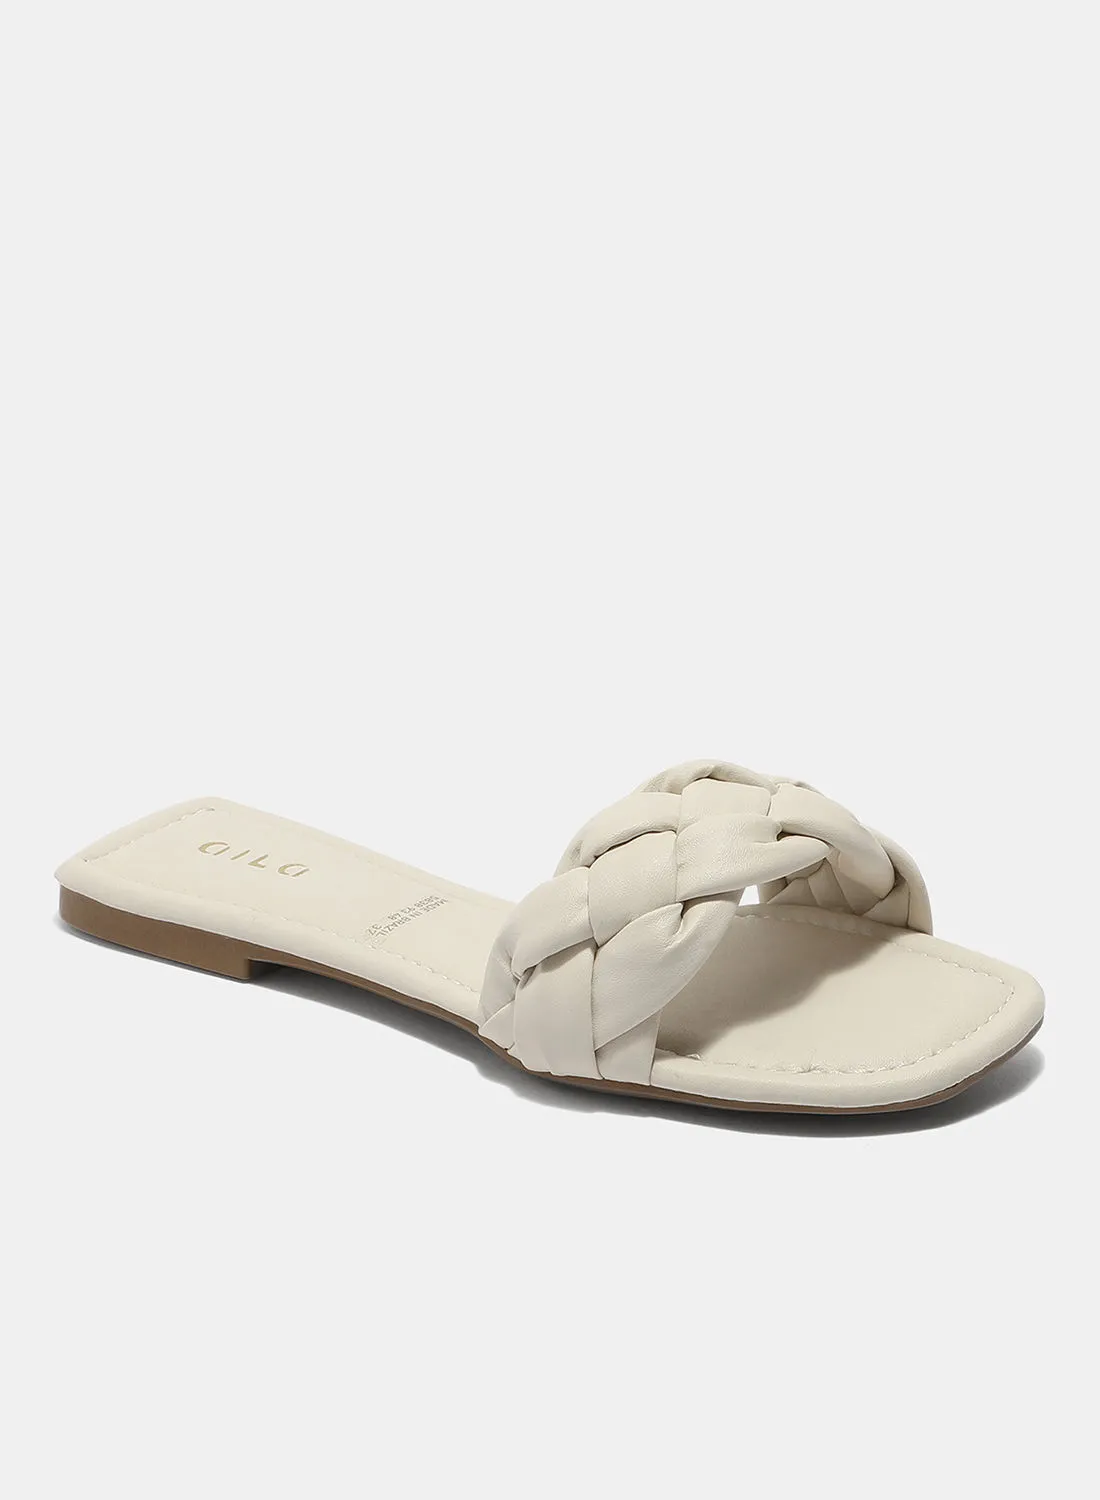 Aila Casual Plain Flat Sandals Off White